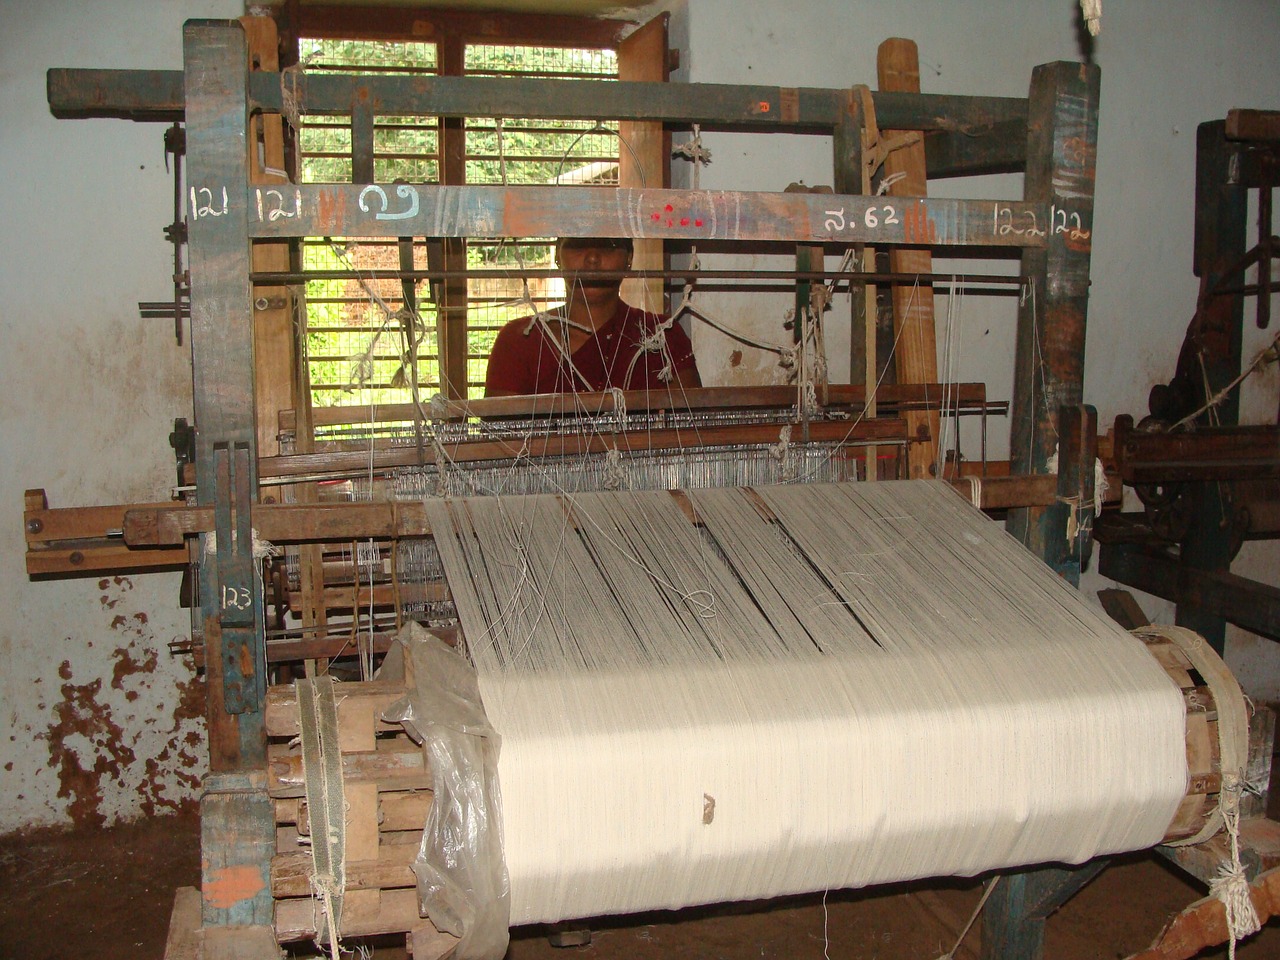 Traditional handloom, Andhra Pradesh weaving, Indian weaver, cotton textiles, cultural heritage, Indian Textile Art History, handwoven fabric, artisanal craftsmanship, sustainable fashion, loom weaving